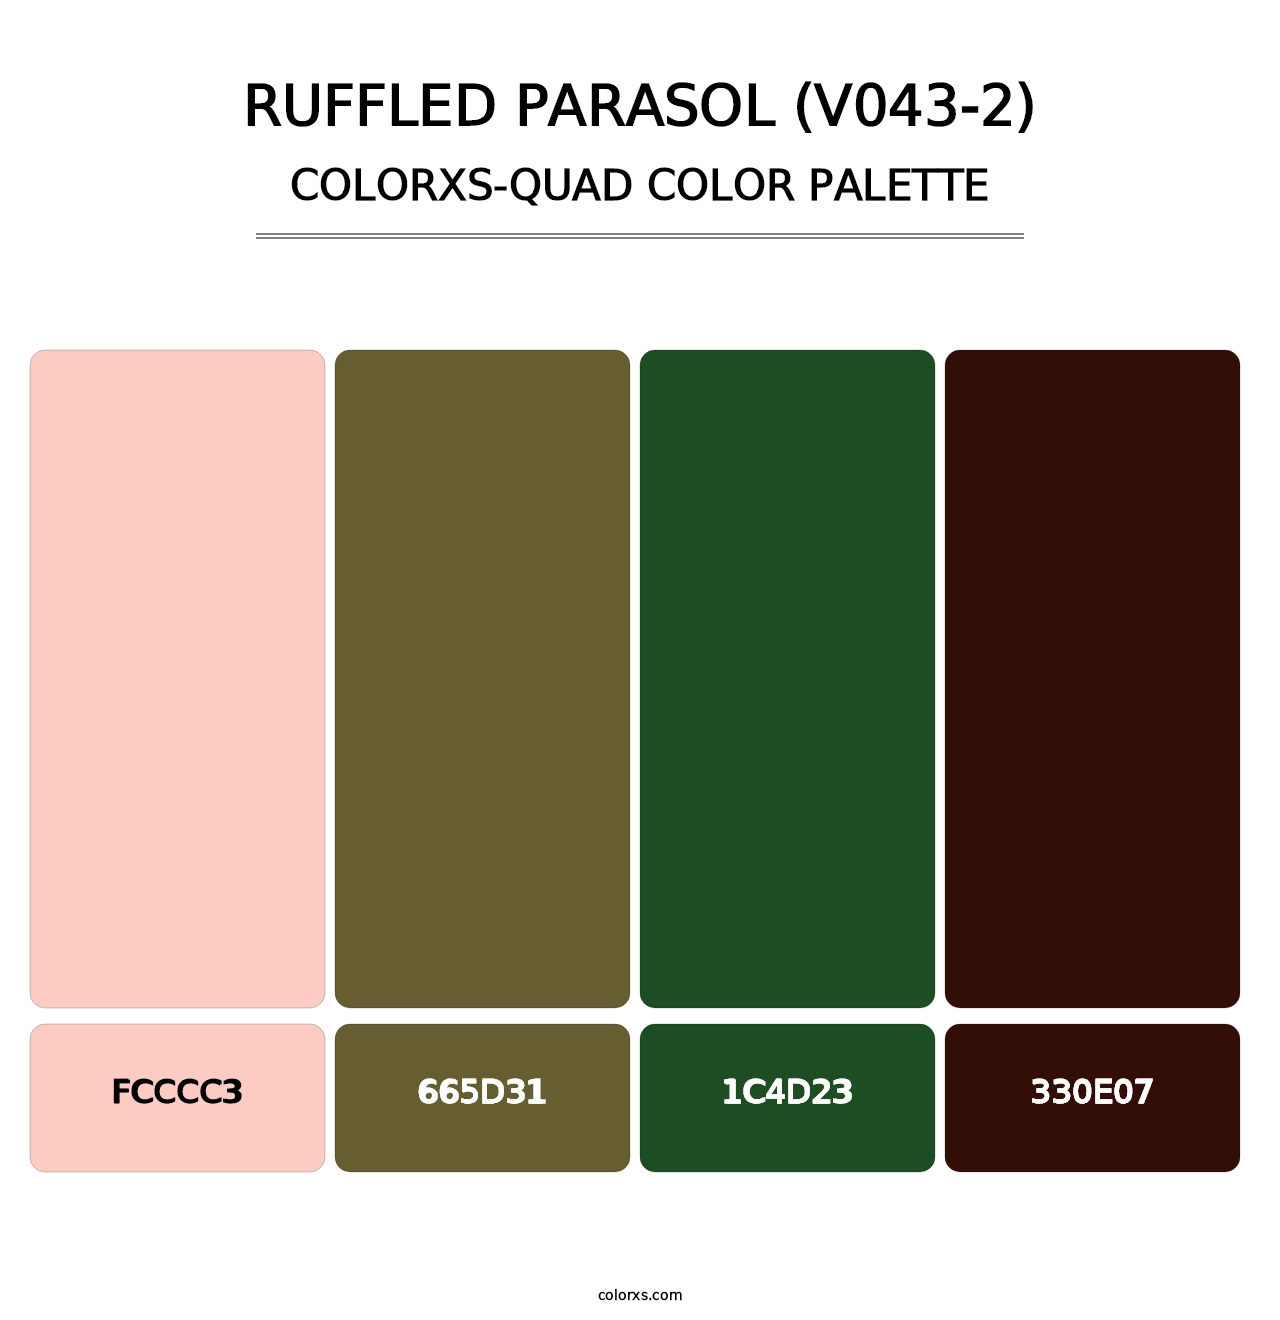 Ruffled Parasol (V043-2) - Colorxs Quad Palette